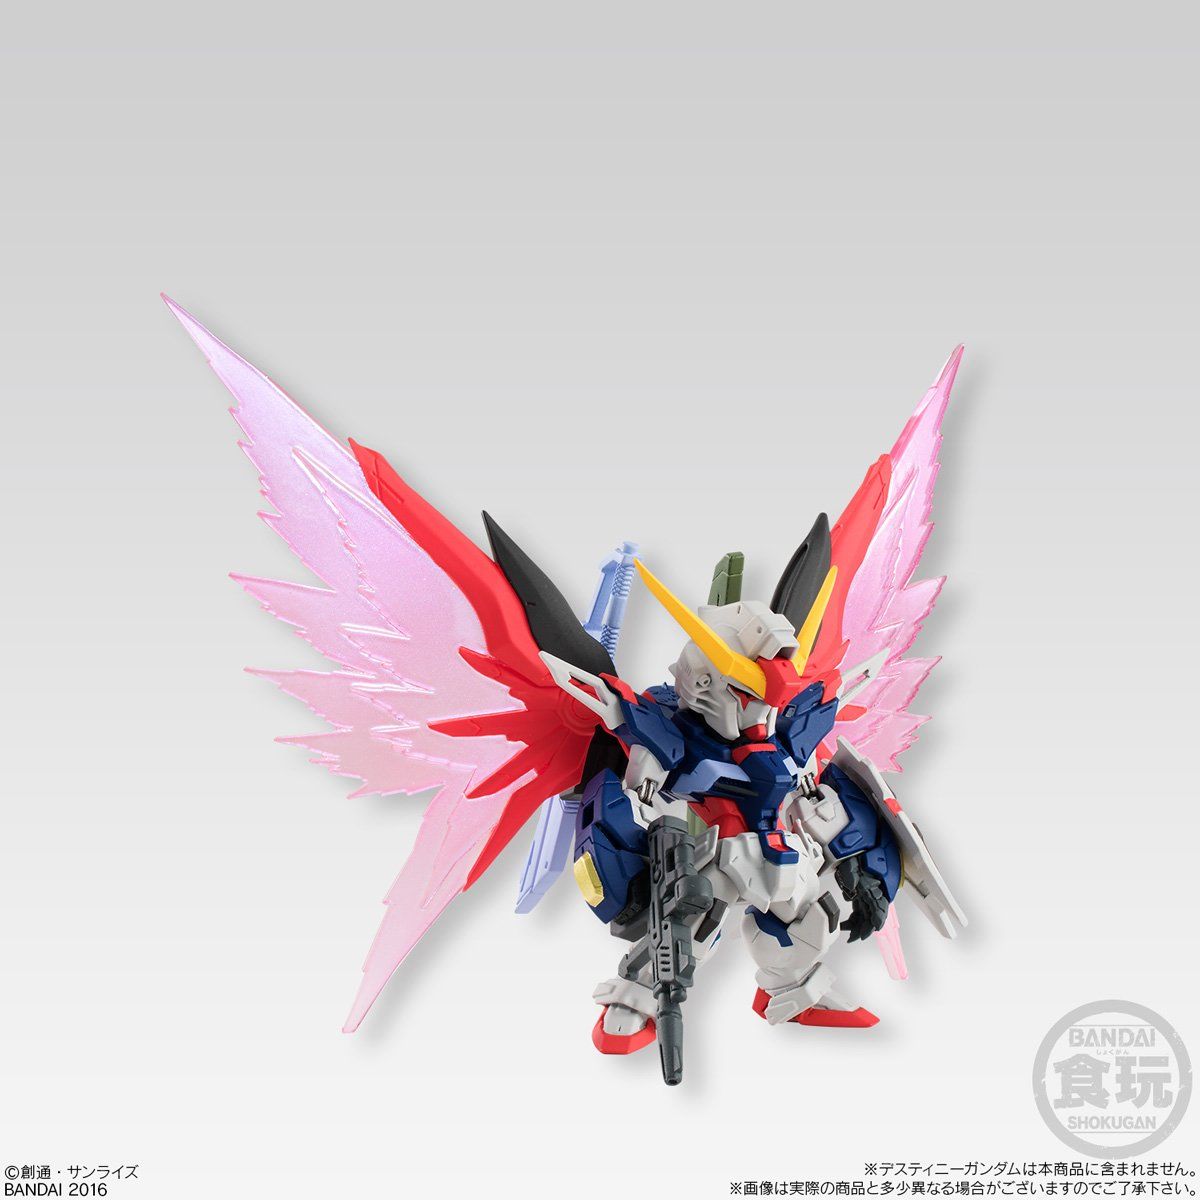 FW Gundam Converge Expansion Parts Wing of Light for ZGMF-X20A Strike Freedom Gundam + ZGMF-X42S Destiny Gundam